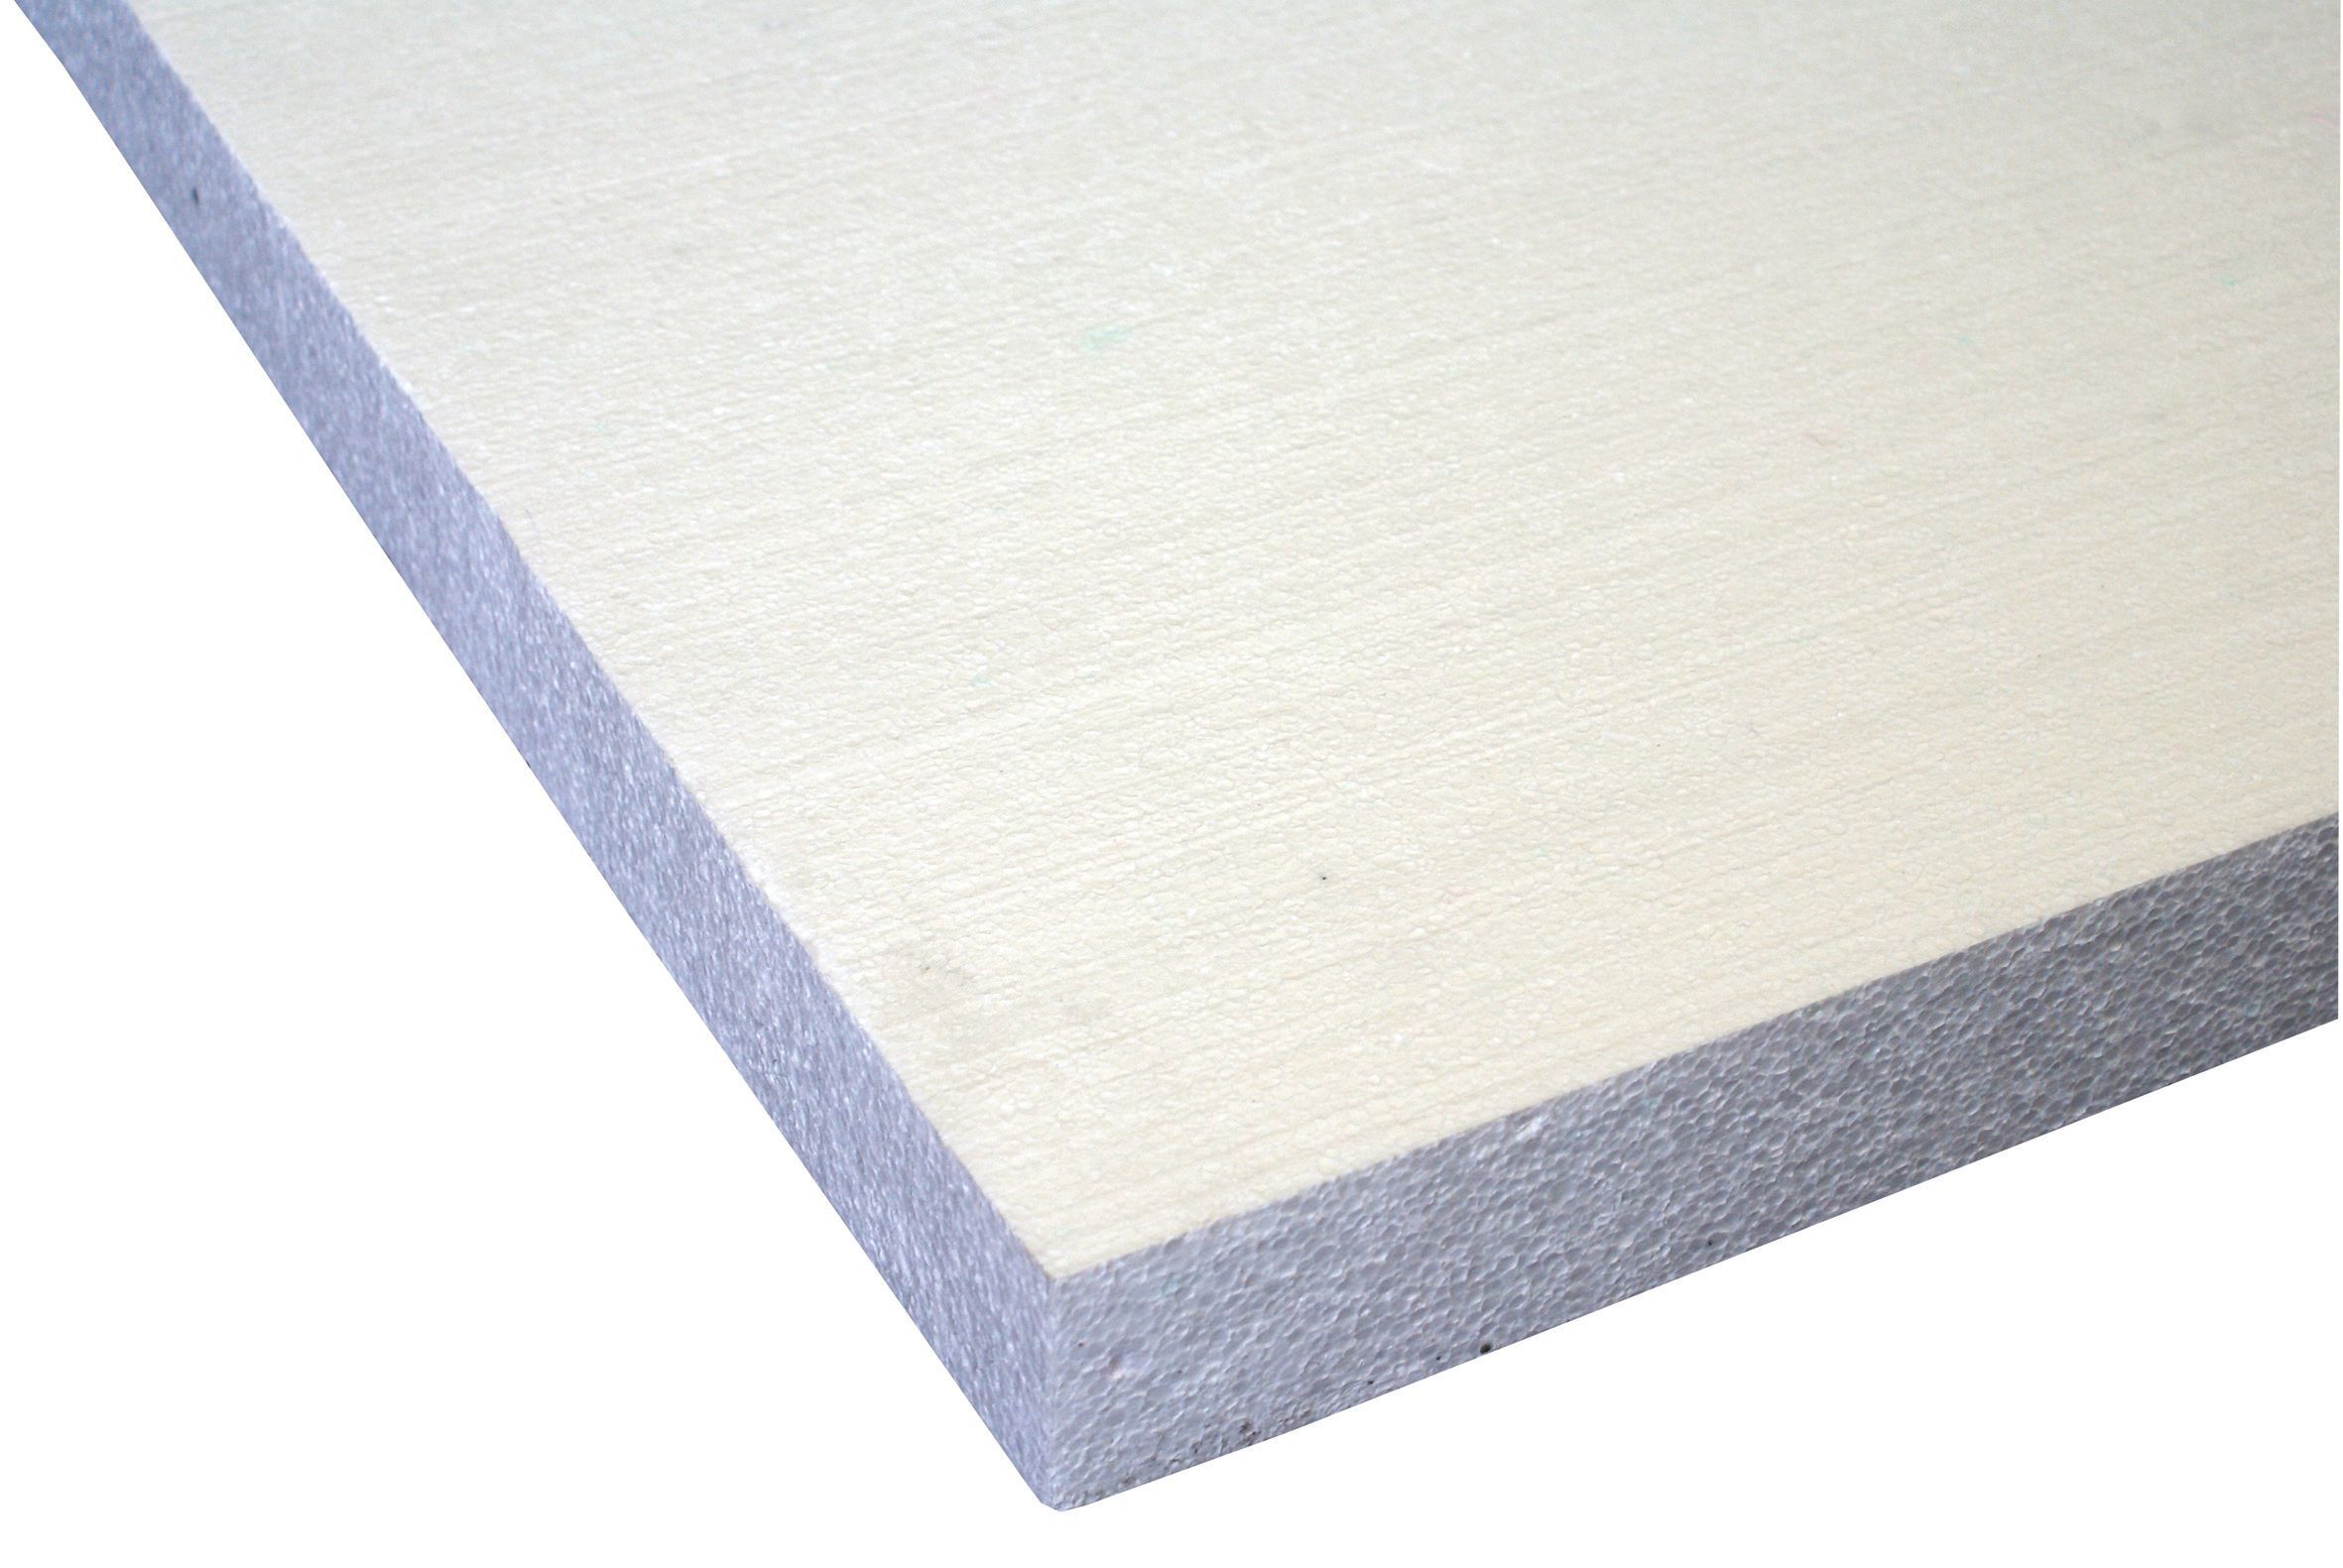 Jablite Polystyrene Insulation Board L 2 4m W 1 2m T 50mm Departments Diy At B Q